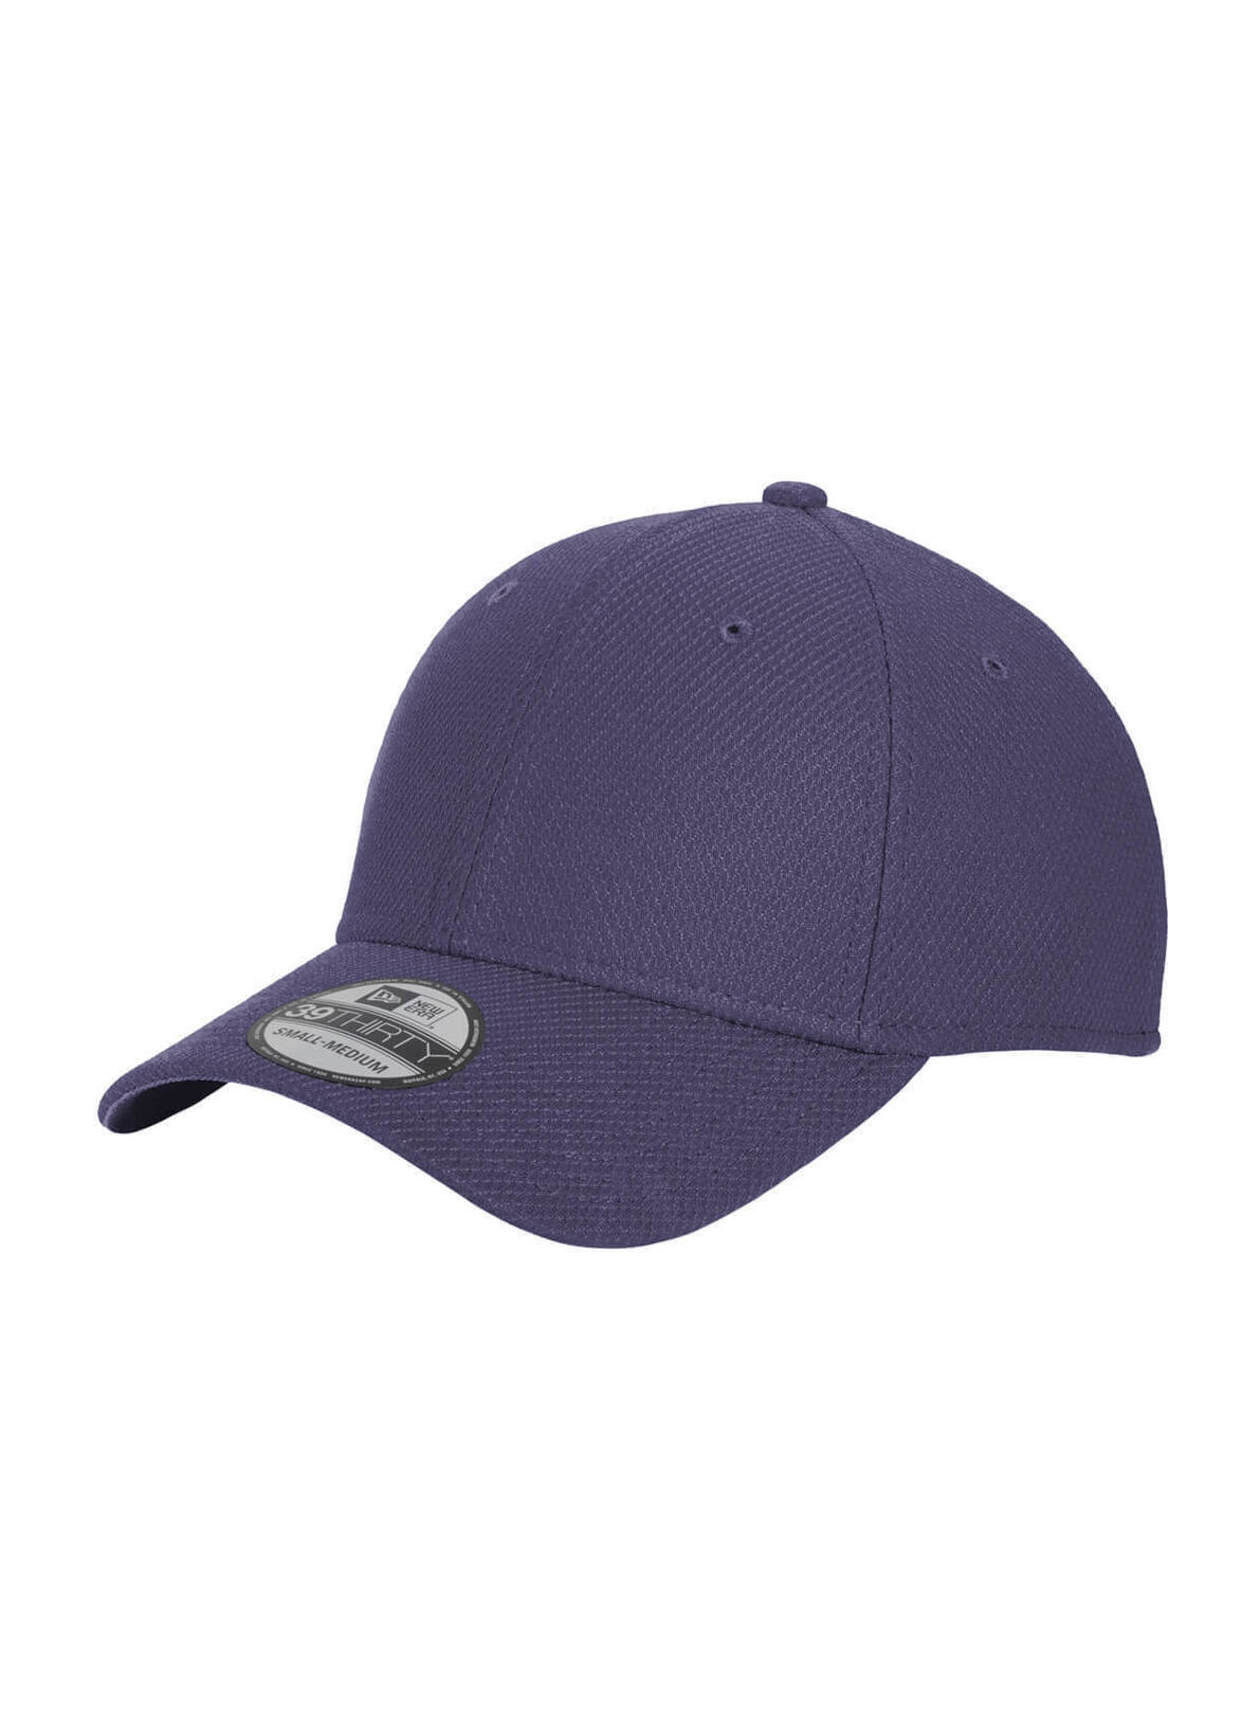 New Era True Navy Diamond Era Stretch Hat